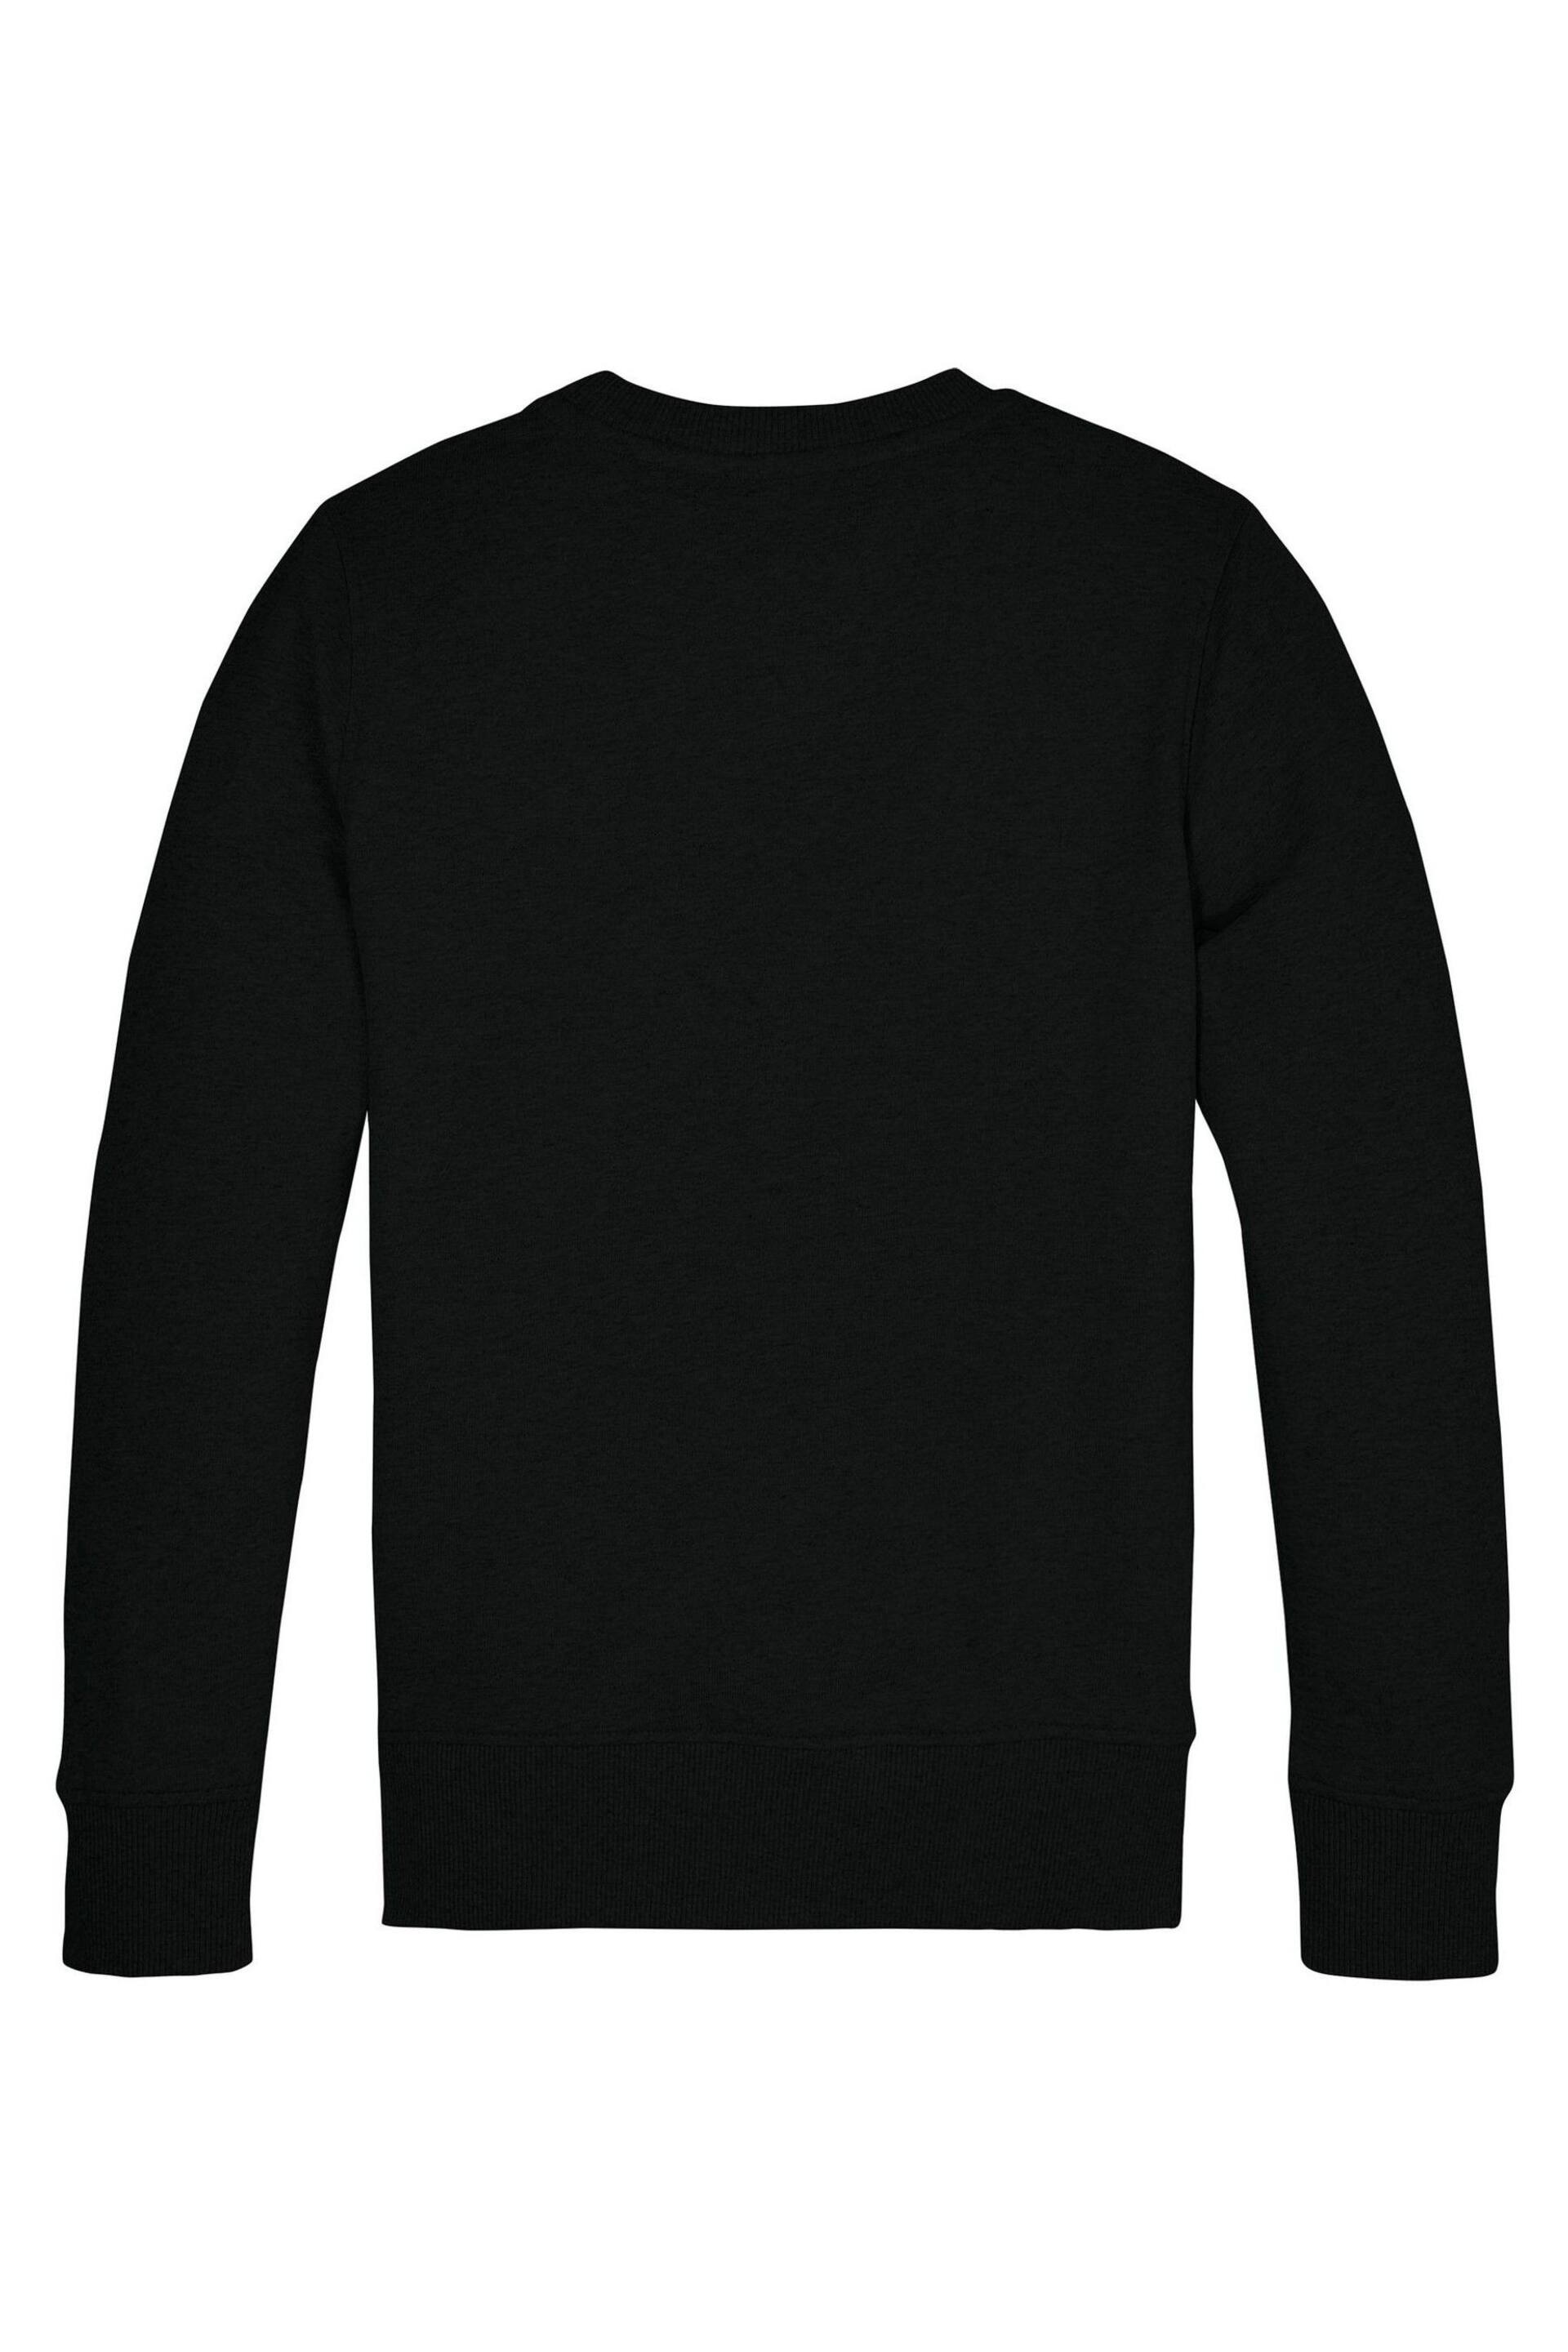 Tommy Hilfiger Black Essential Sweatshirt - Image 2 of 2